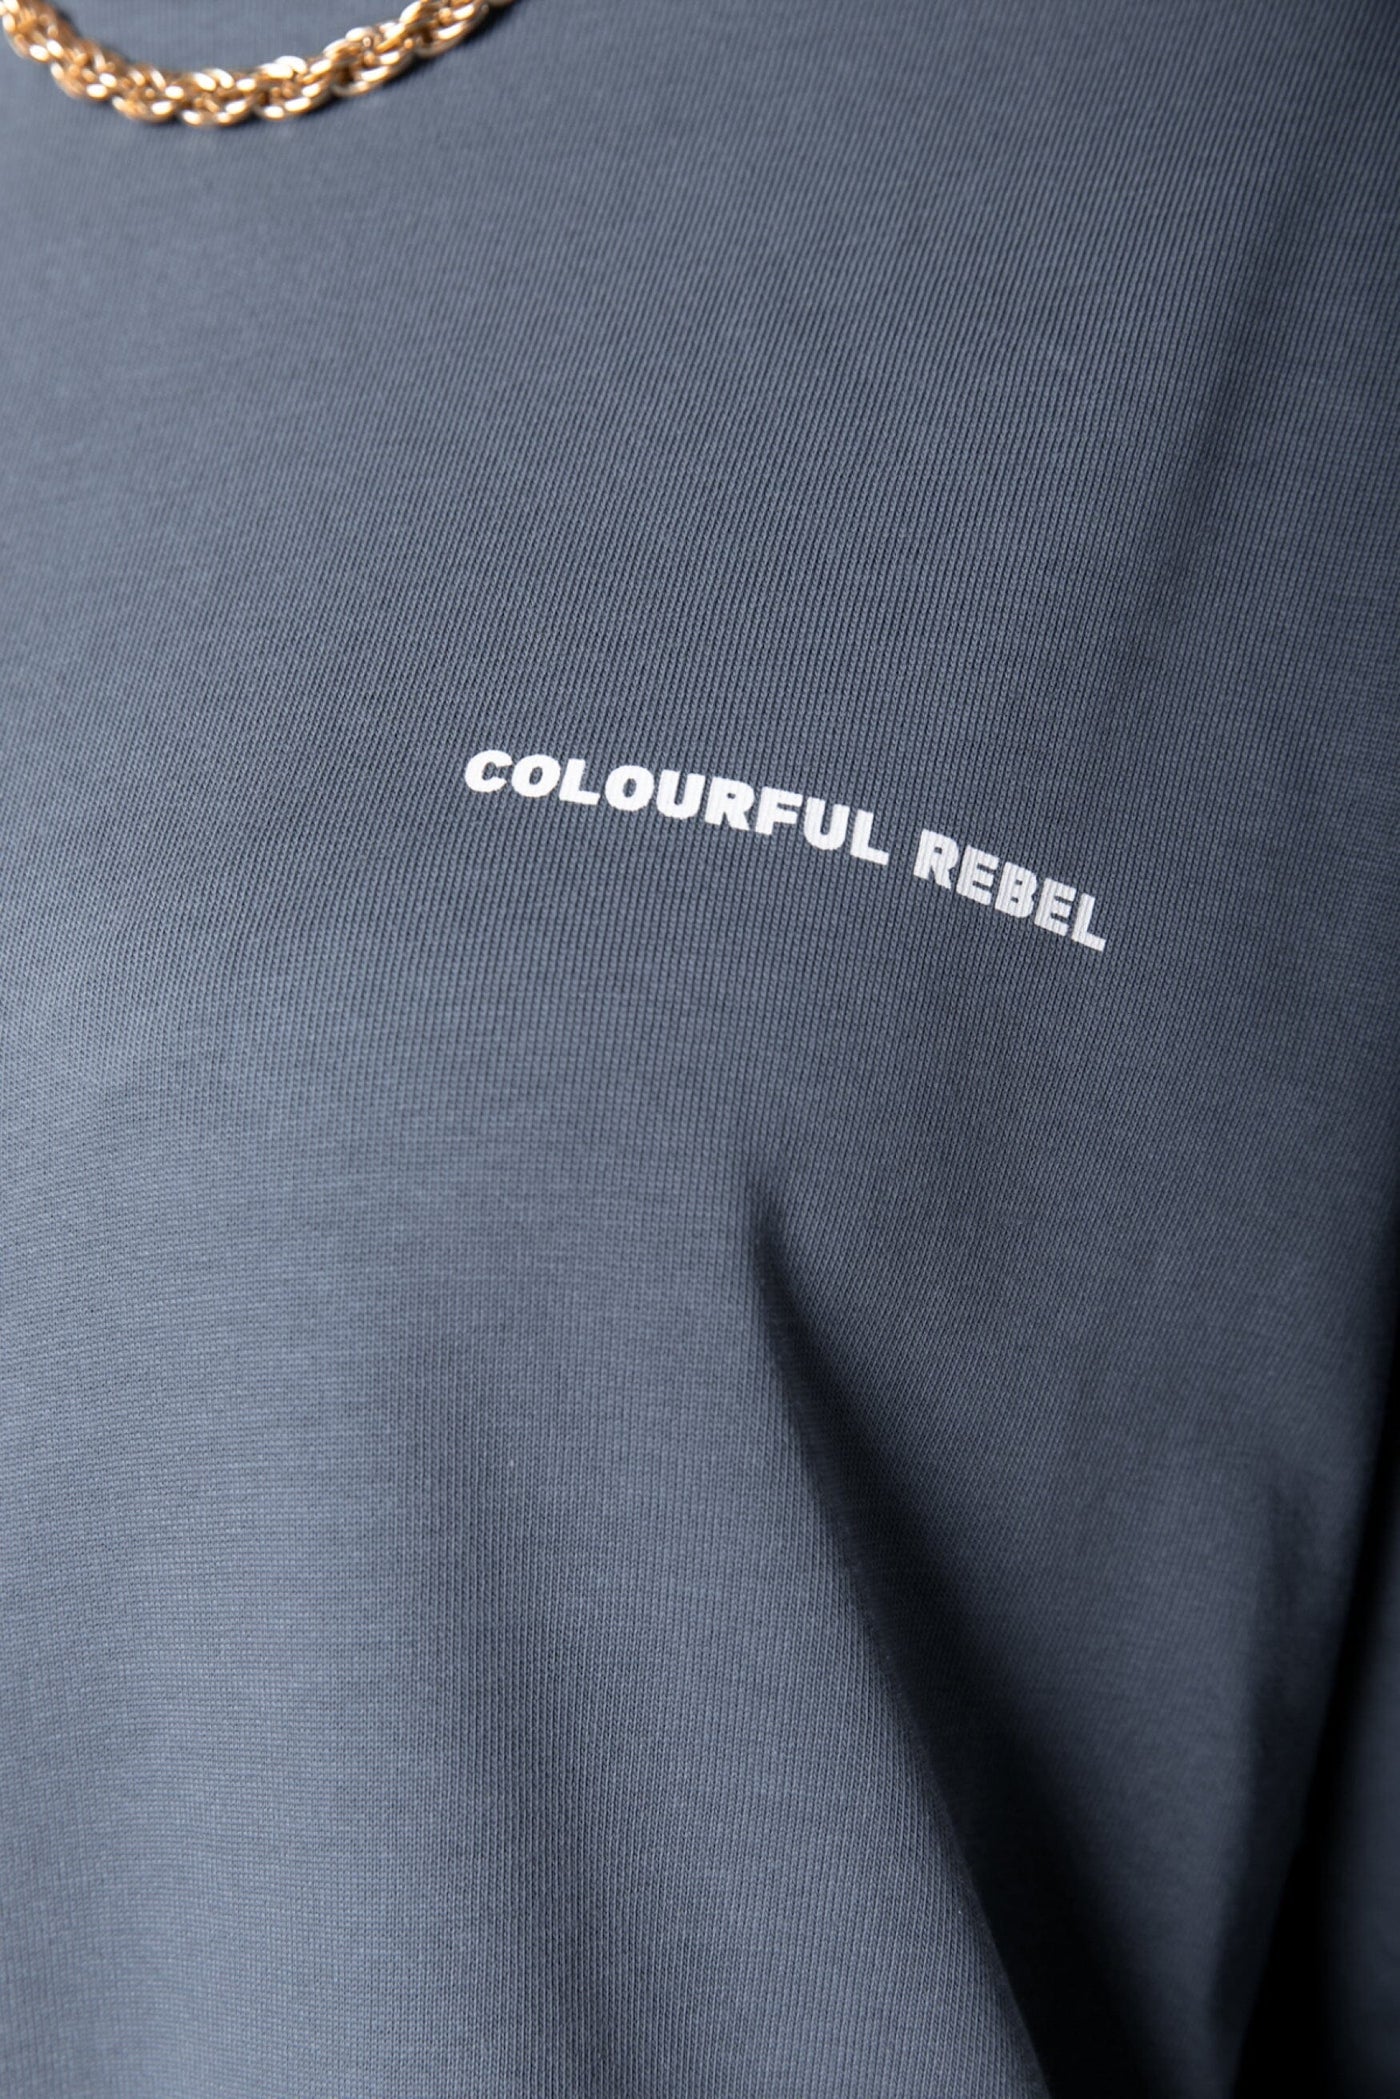 Colourful Rebel Logo Long Sleeve Dress | Dark grey 